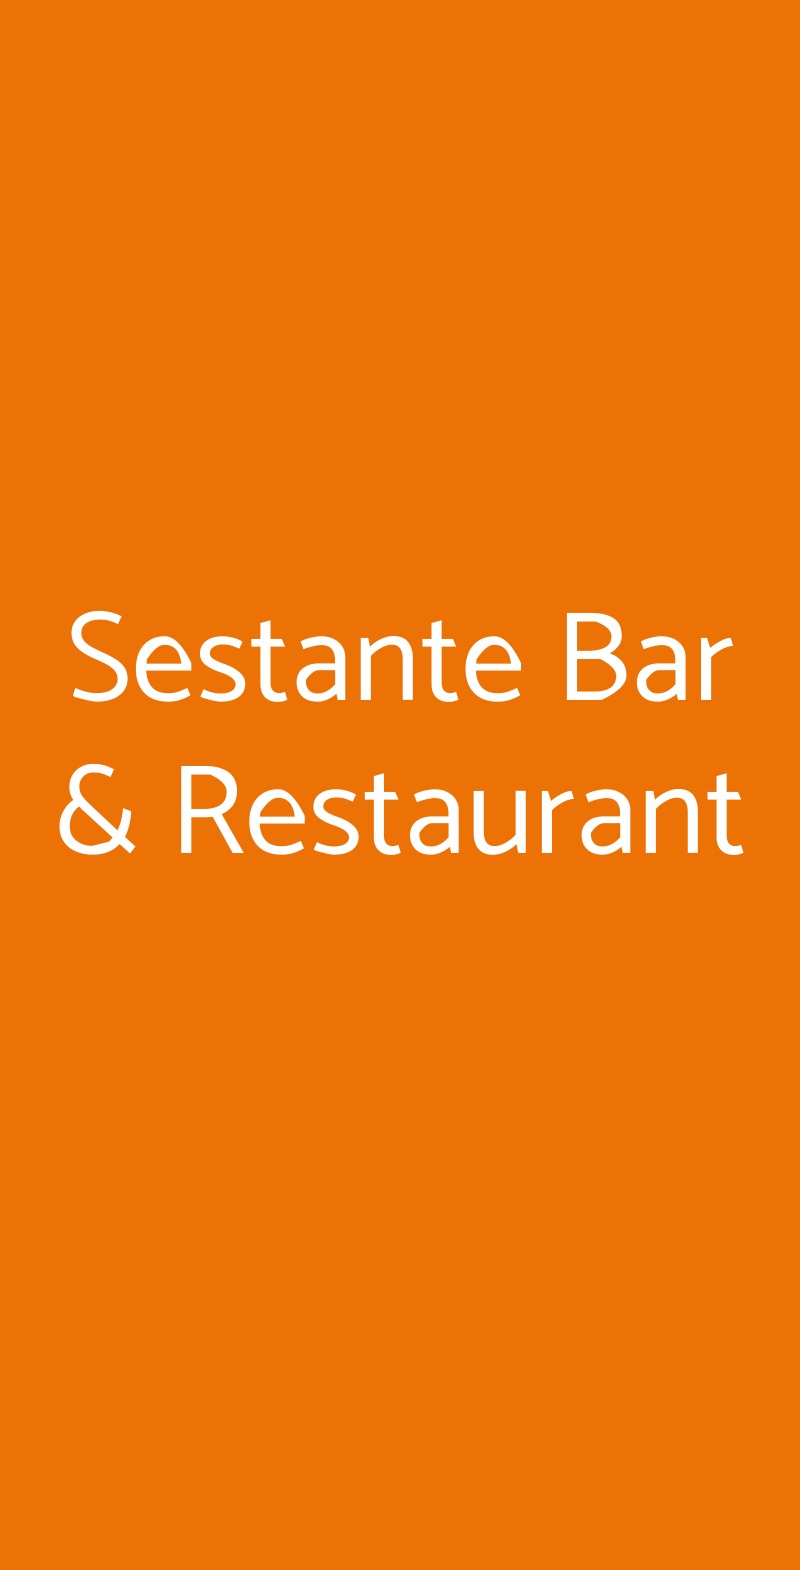 Sestante Bar & Restaurant Venezia menù 1 pagina